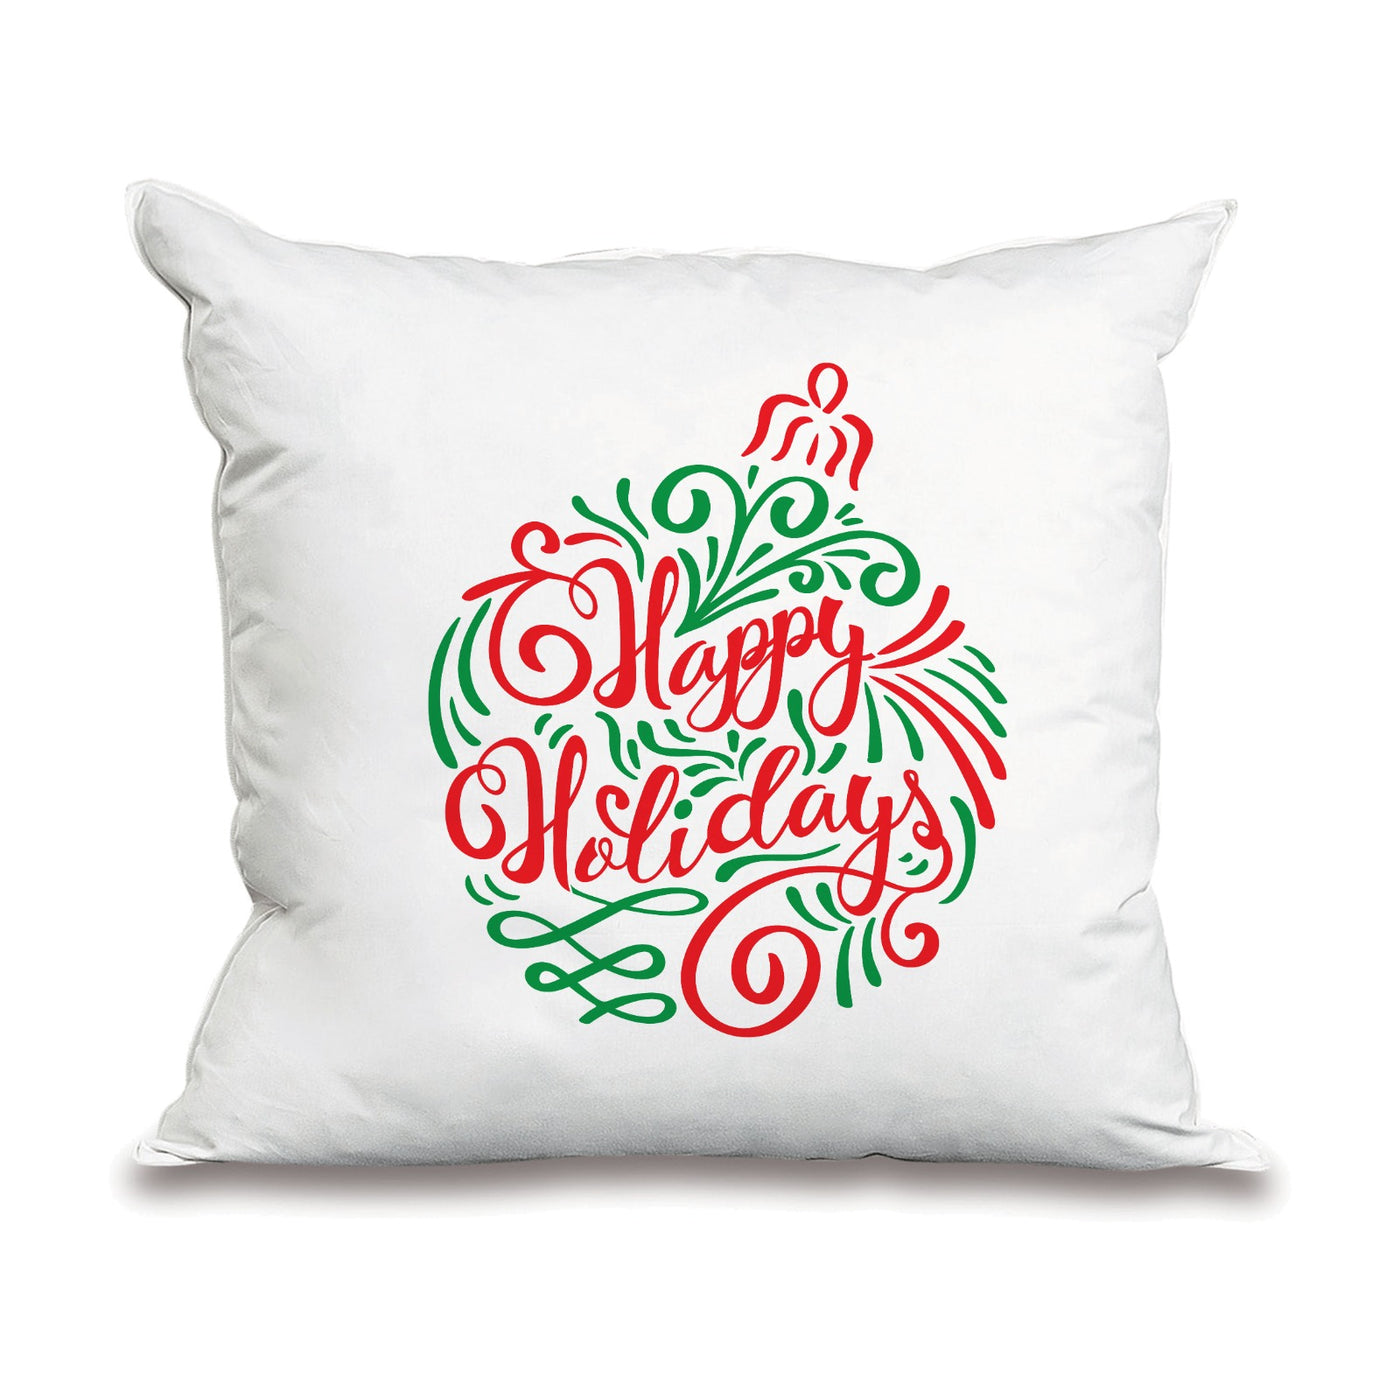 Happy Holidays Christmas Cushion